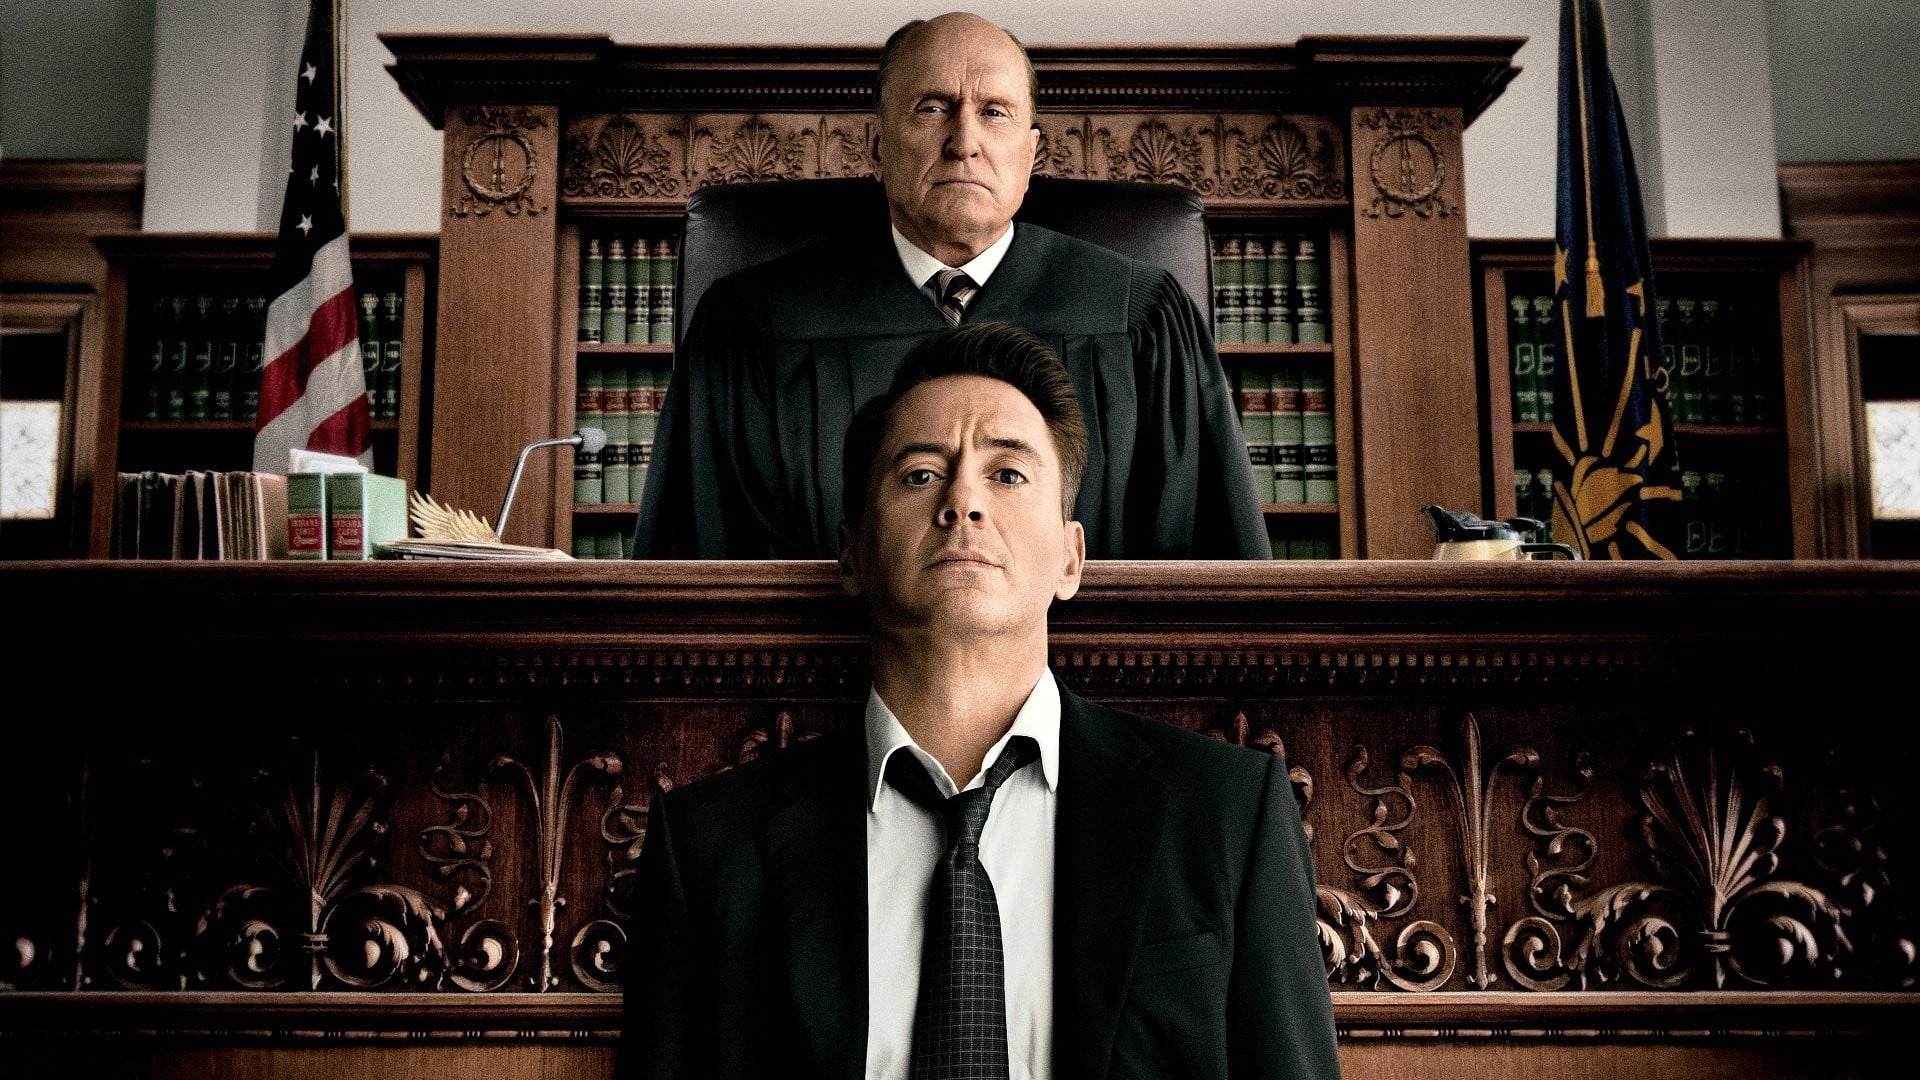 The Judge 2014 123movies